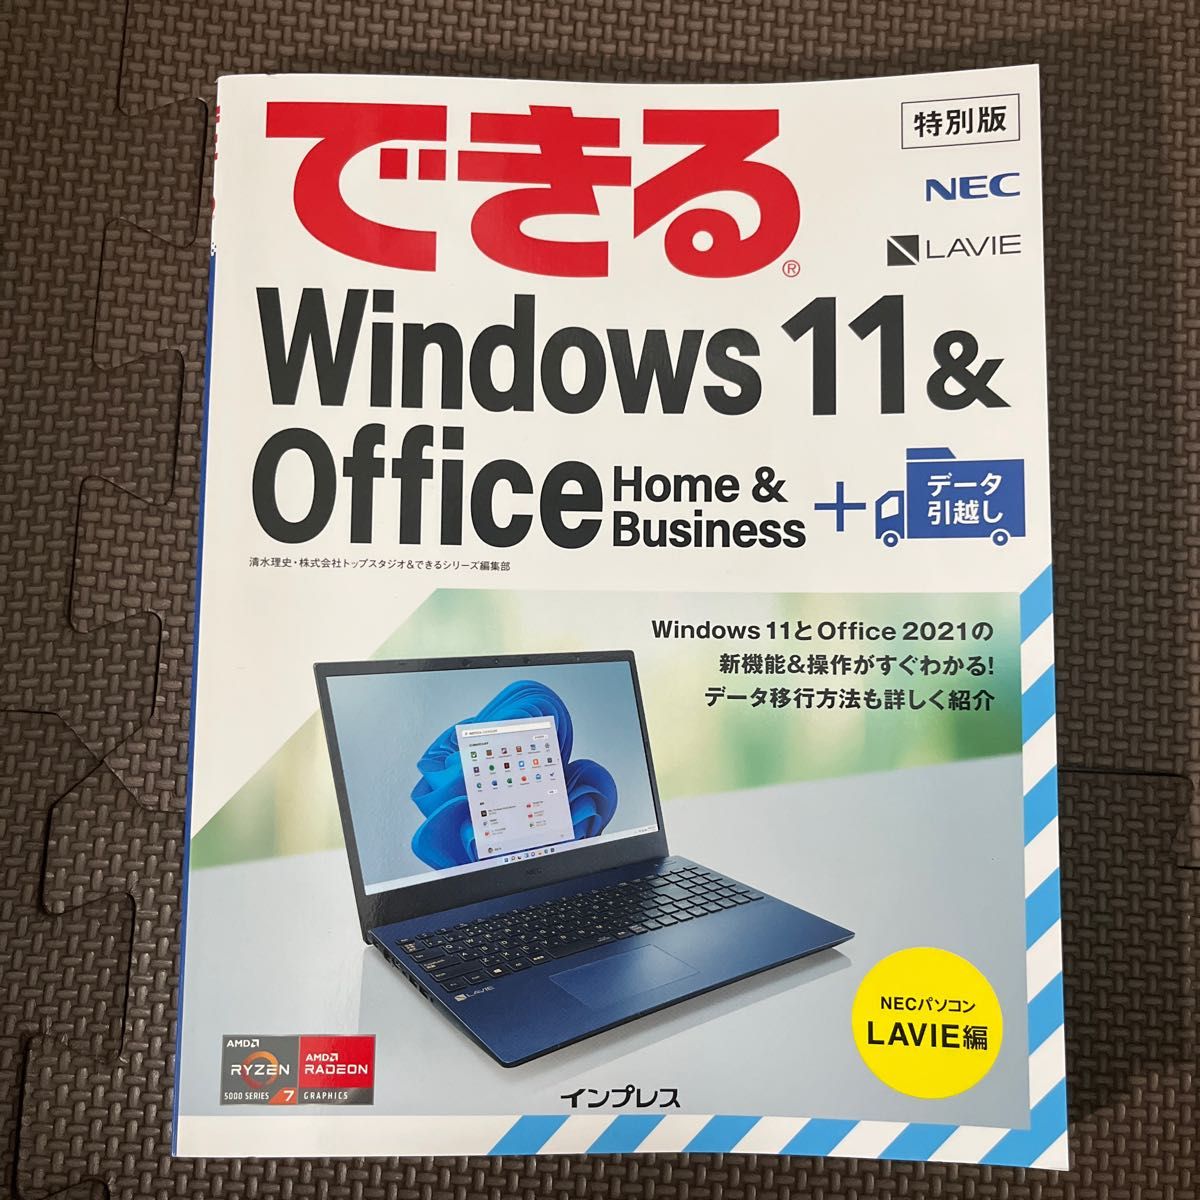 Windows11新機能完全マニュアル